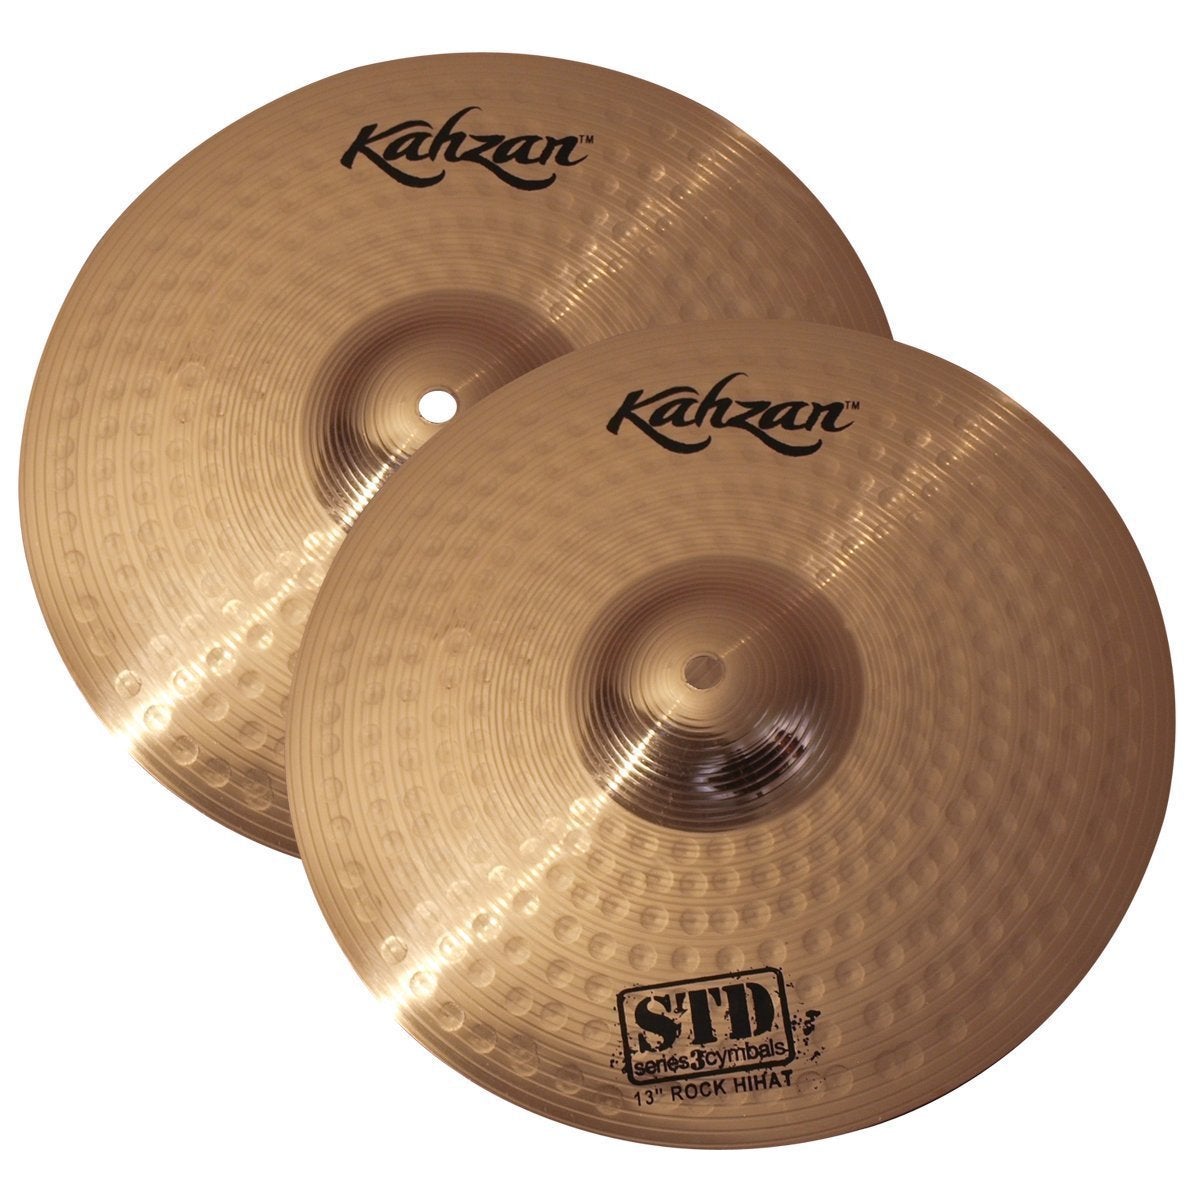 Kahzan 'STD-3 Series' Rock Hi-Hat Cymbals (13")-KC-STD3-13RHH